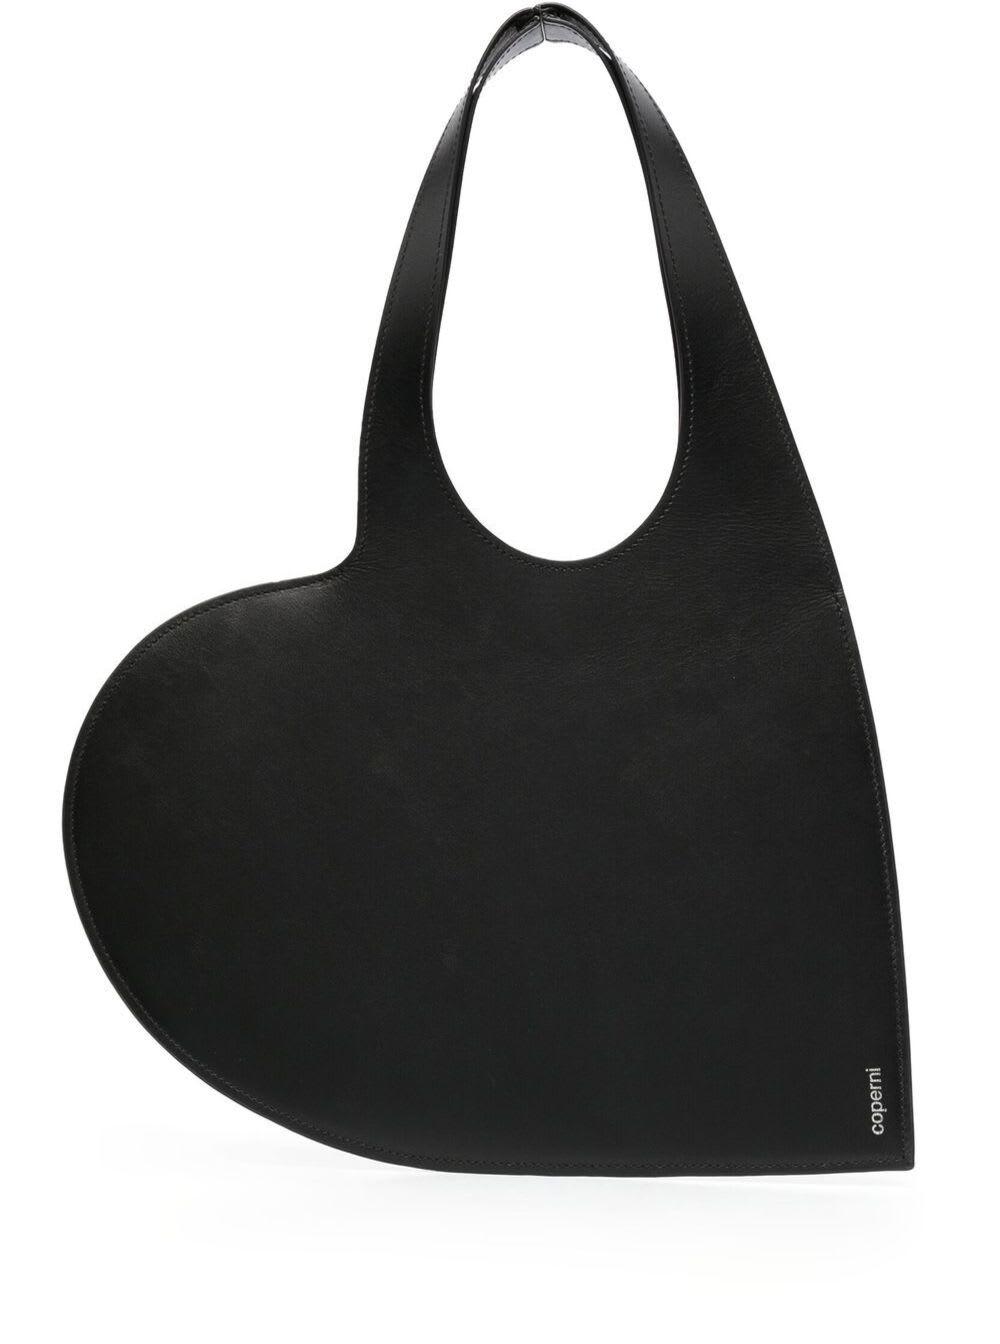 Coperni Mini Heart Bag in Black | Lyst